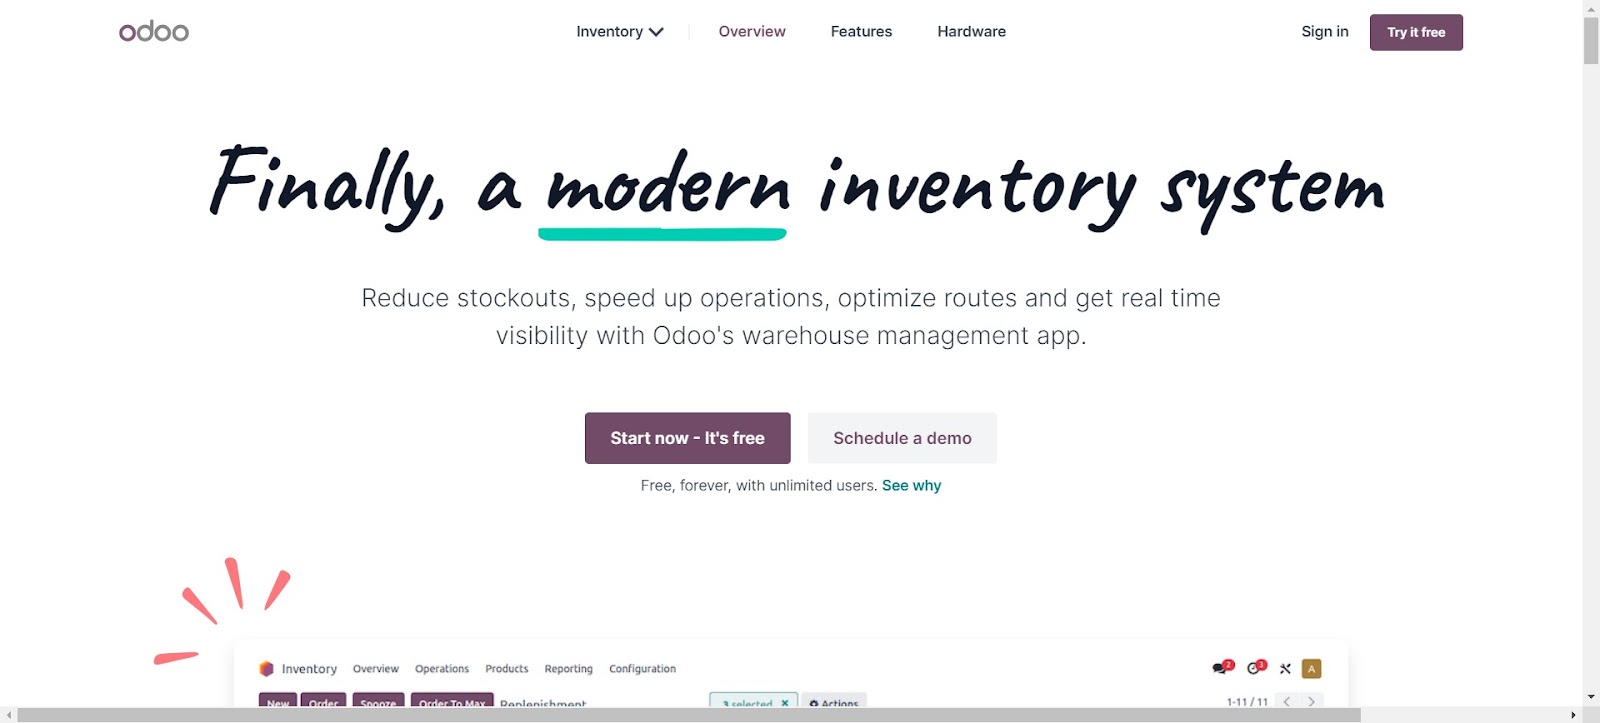 A screenshot of Odoo Inventory's website